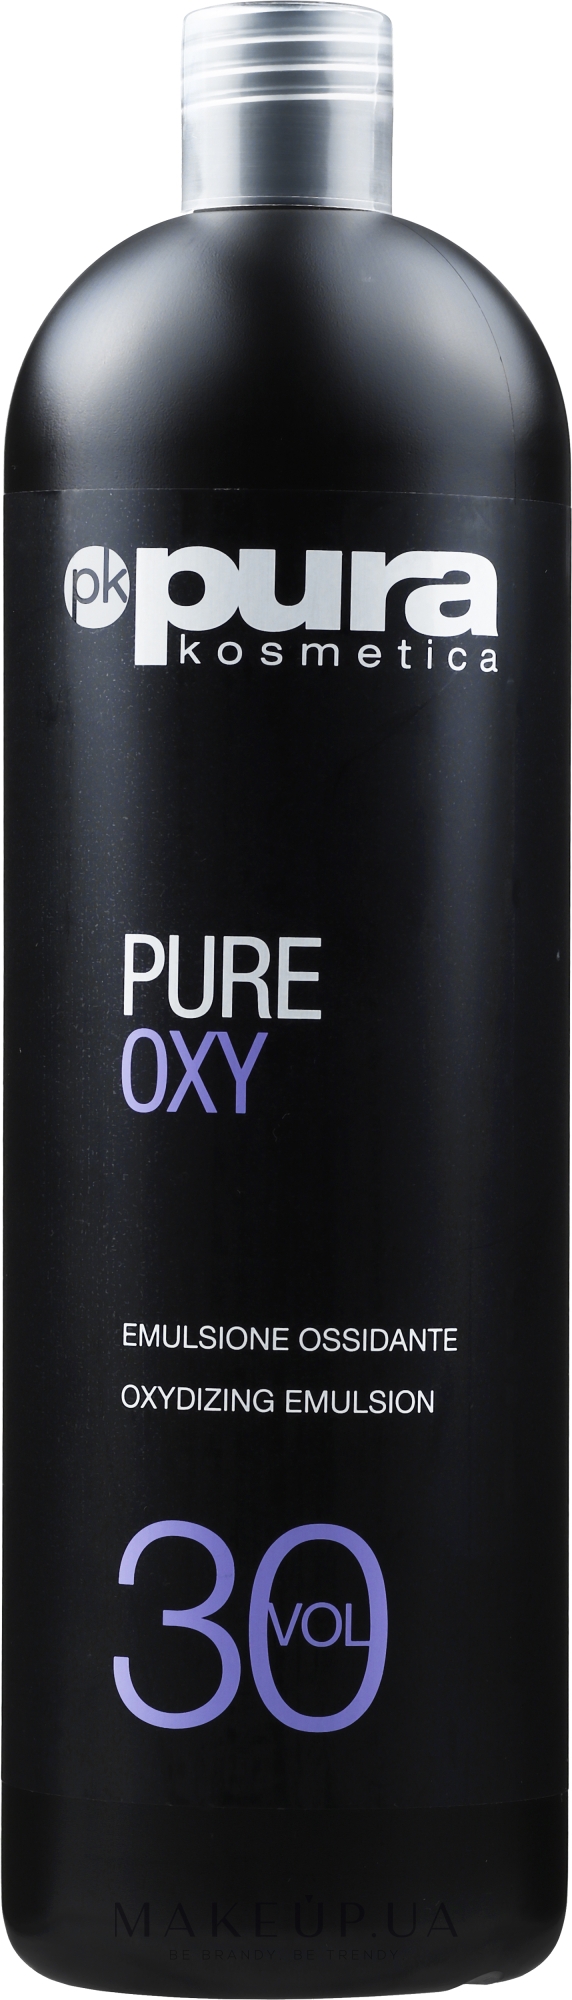 Окислитель для краски 9% - Pura Kosmetica Pure Oxy 30 Vol — фото 1000ml